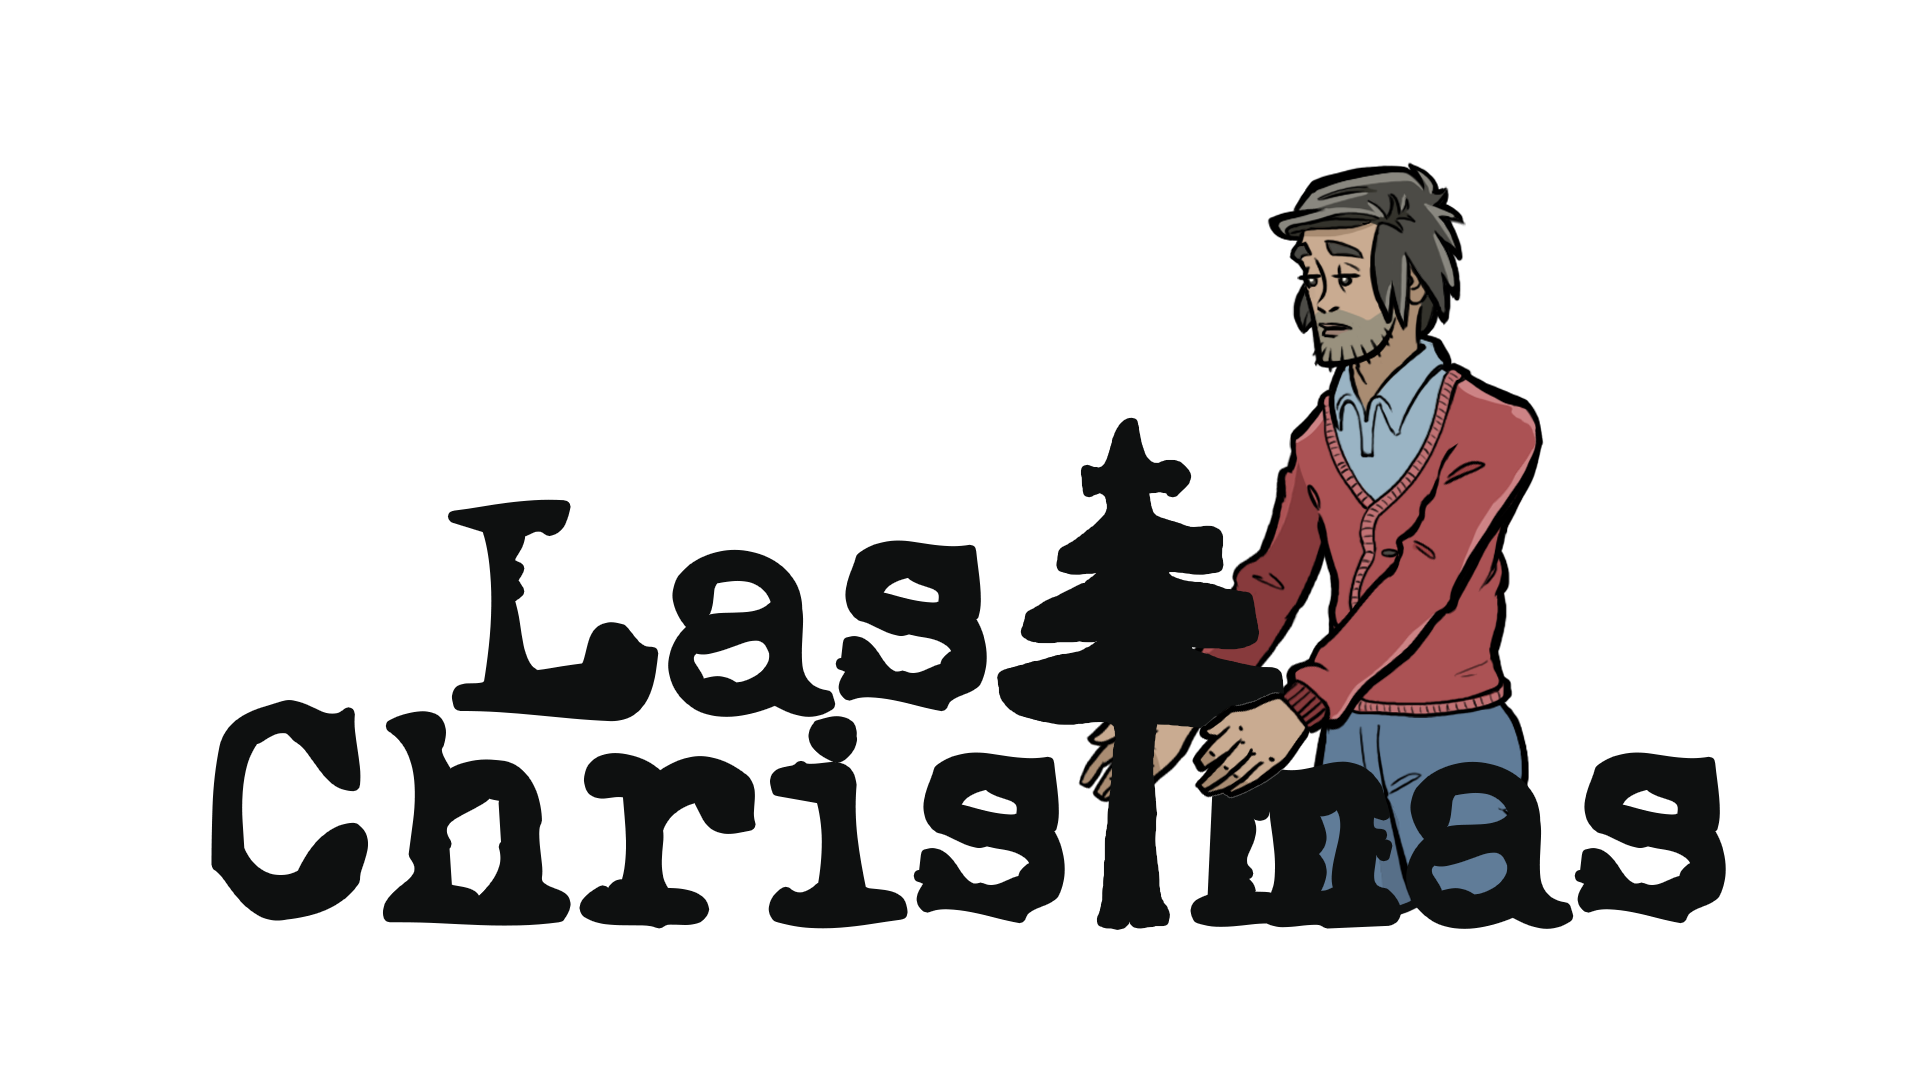 Last Christmas (Game Jam Version)